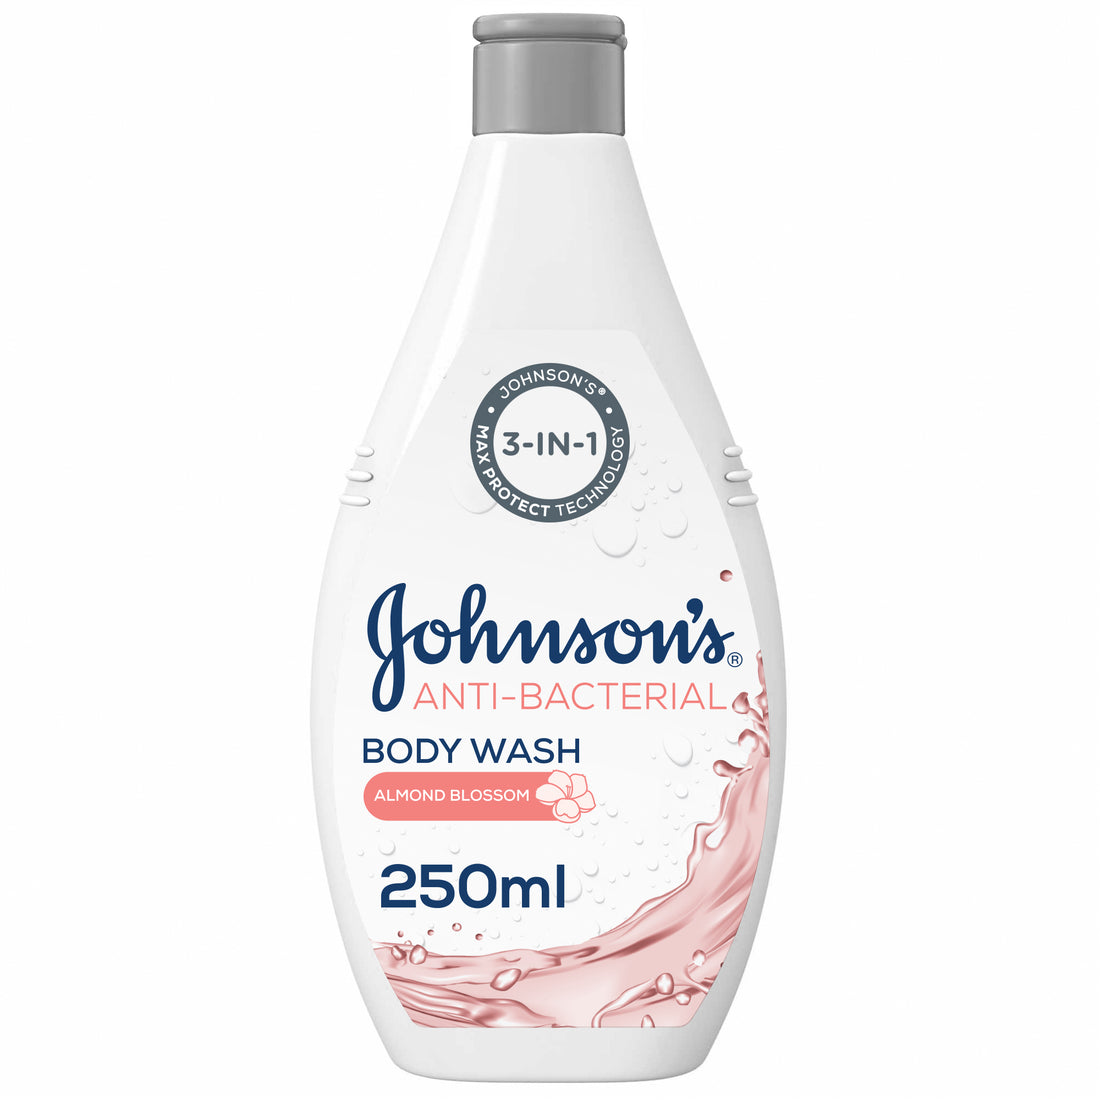 JOHNSON’S Body Wash, Anti-Bacterial, Almond Blossom, 250ml